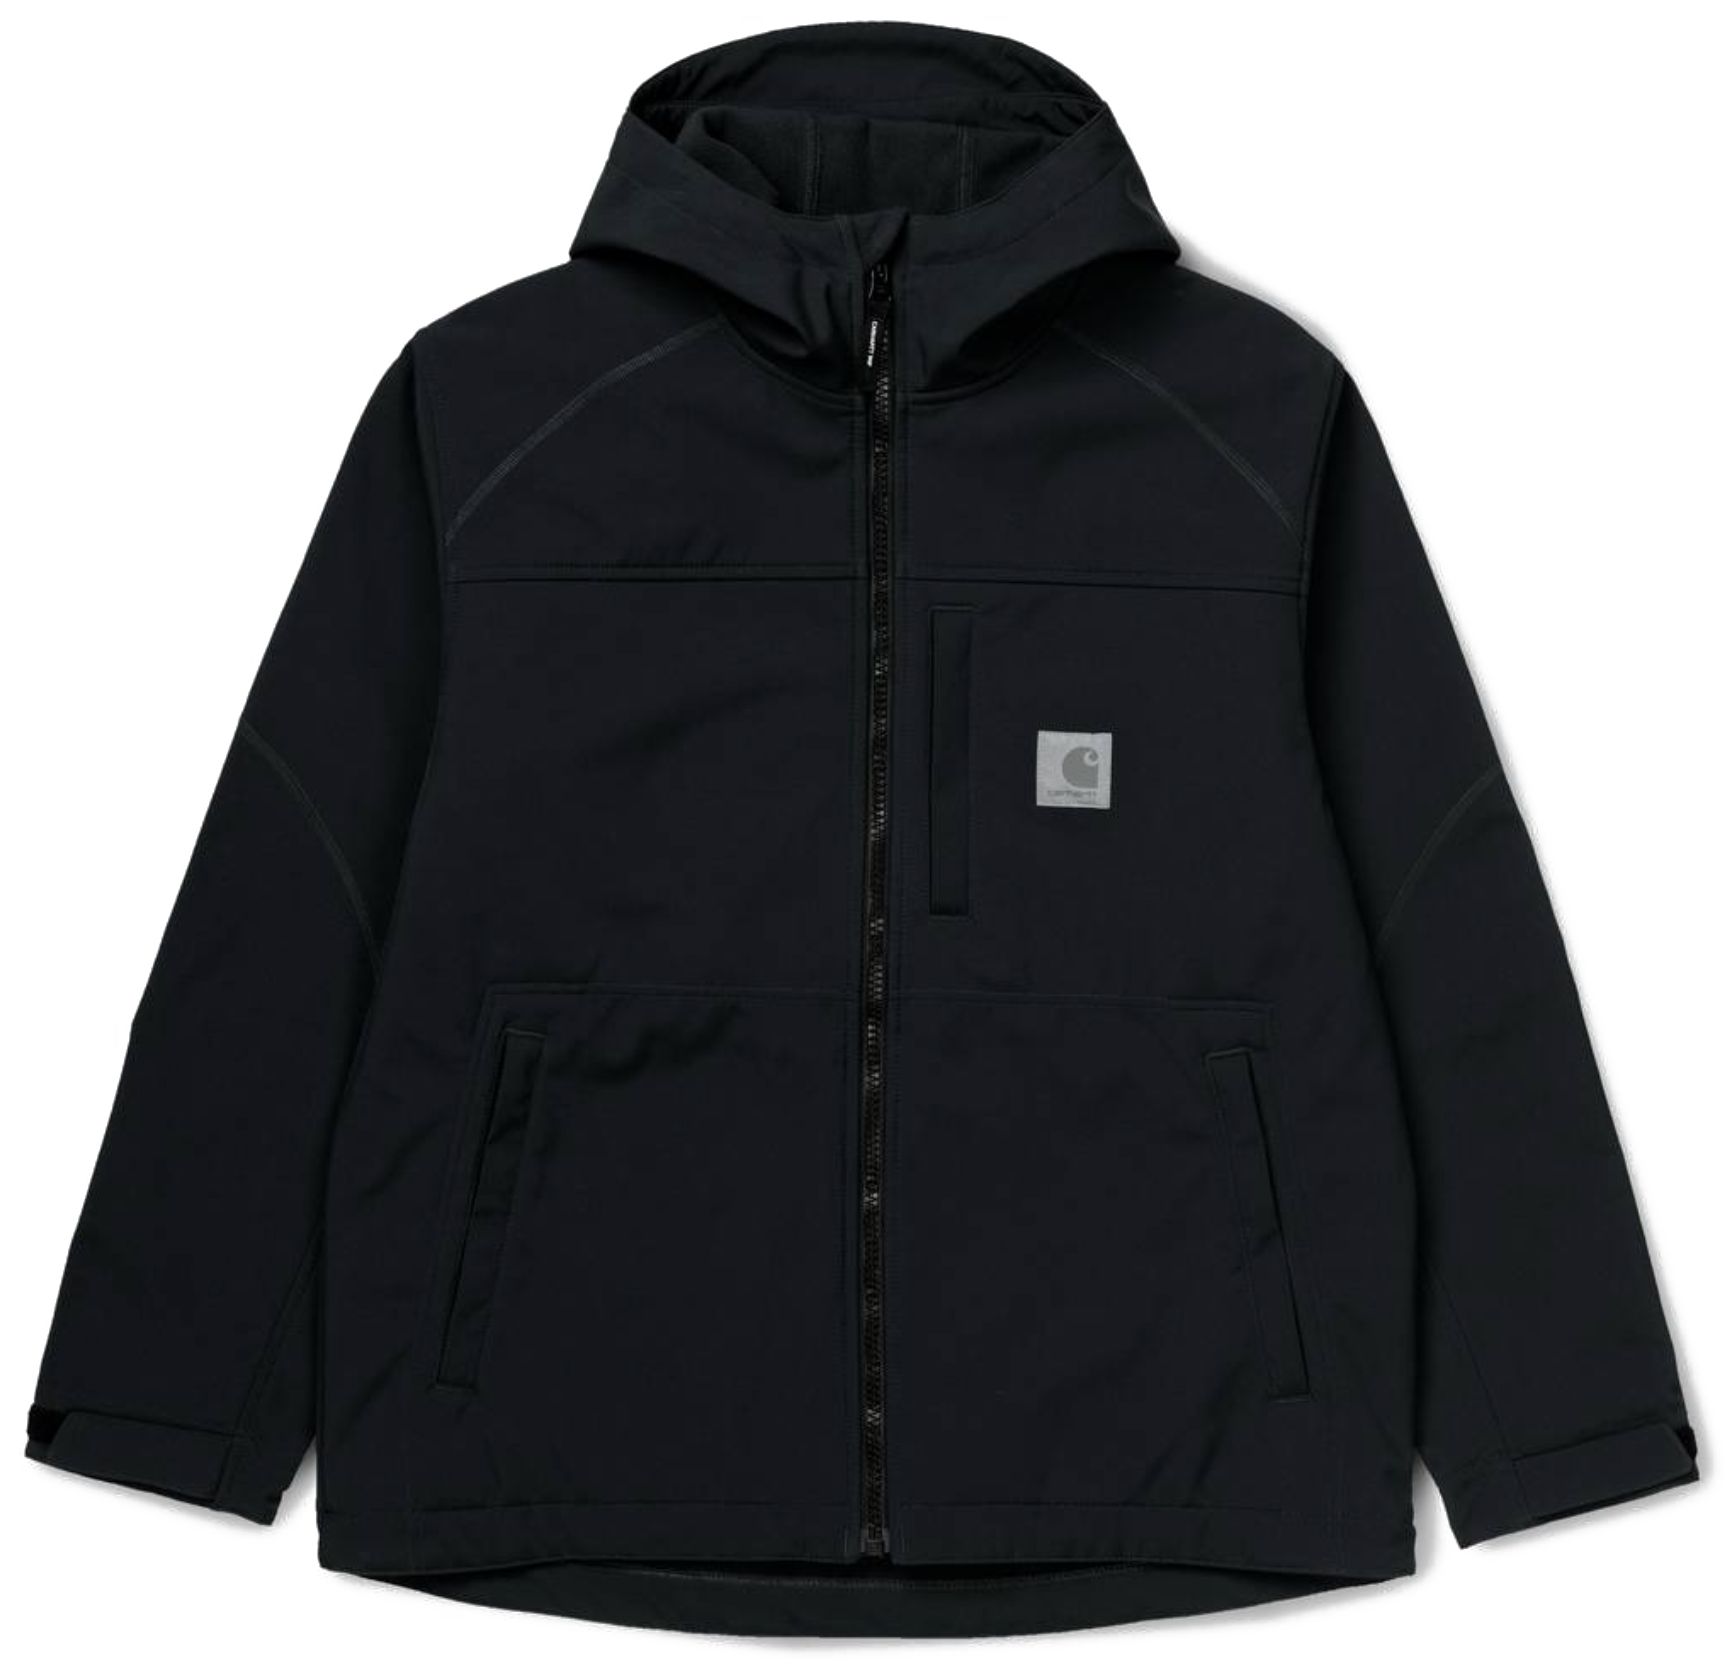 Carhartt Jacket Bode Jacket Black | eBay